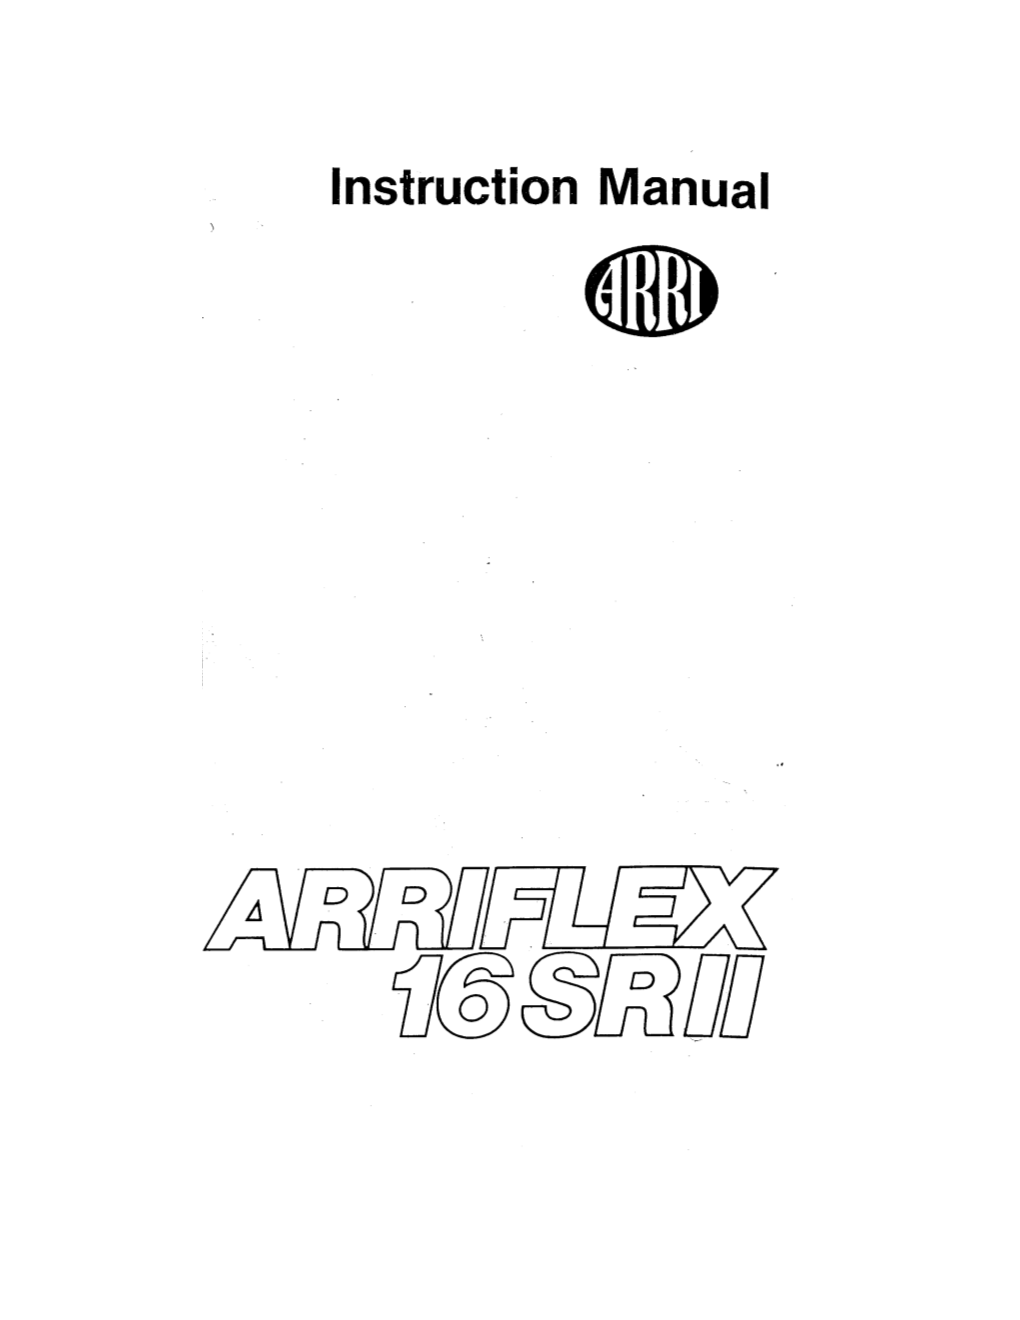 Guide to the ARRIFLEX 16 SR II-E